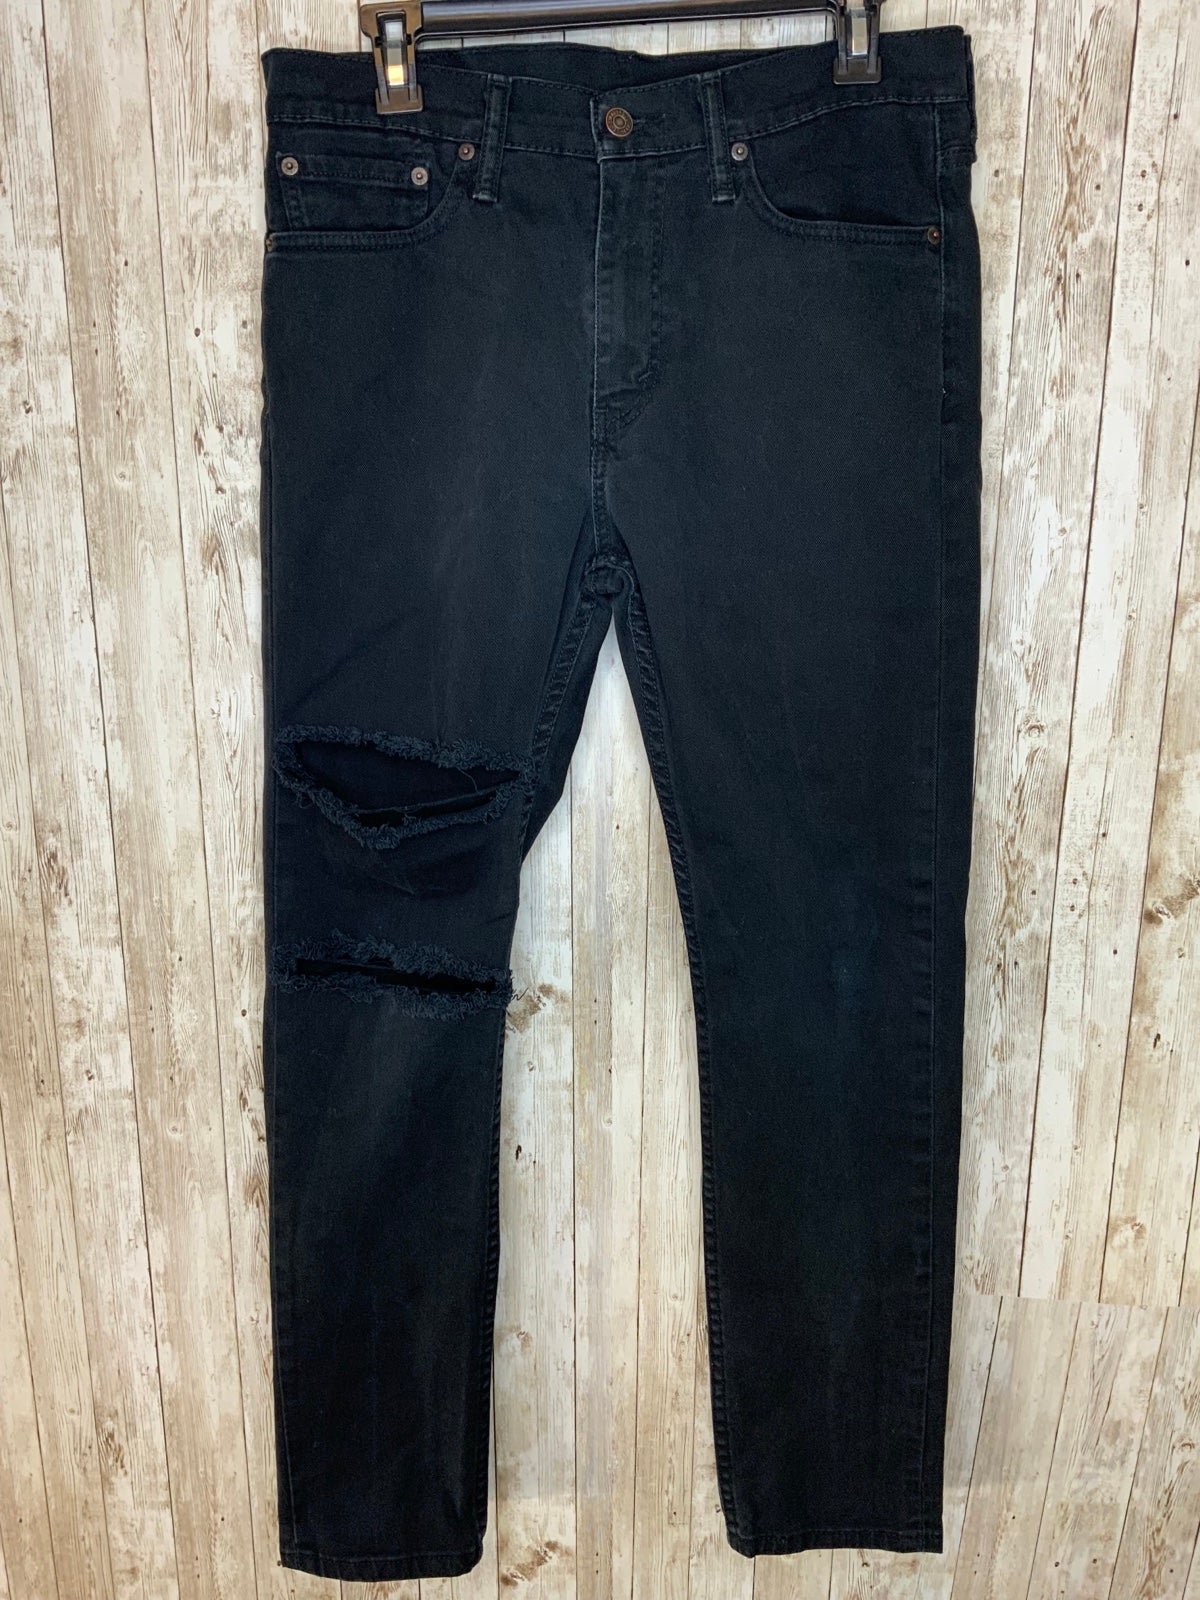 reasonable price 510 Levi’s Mens black jeans (32/30) G7